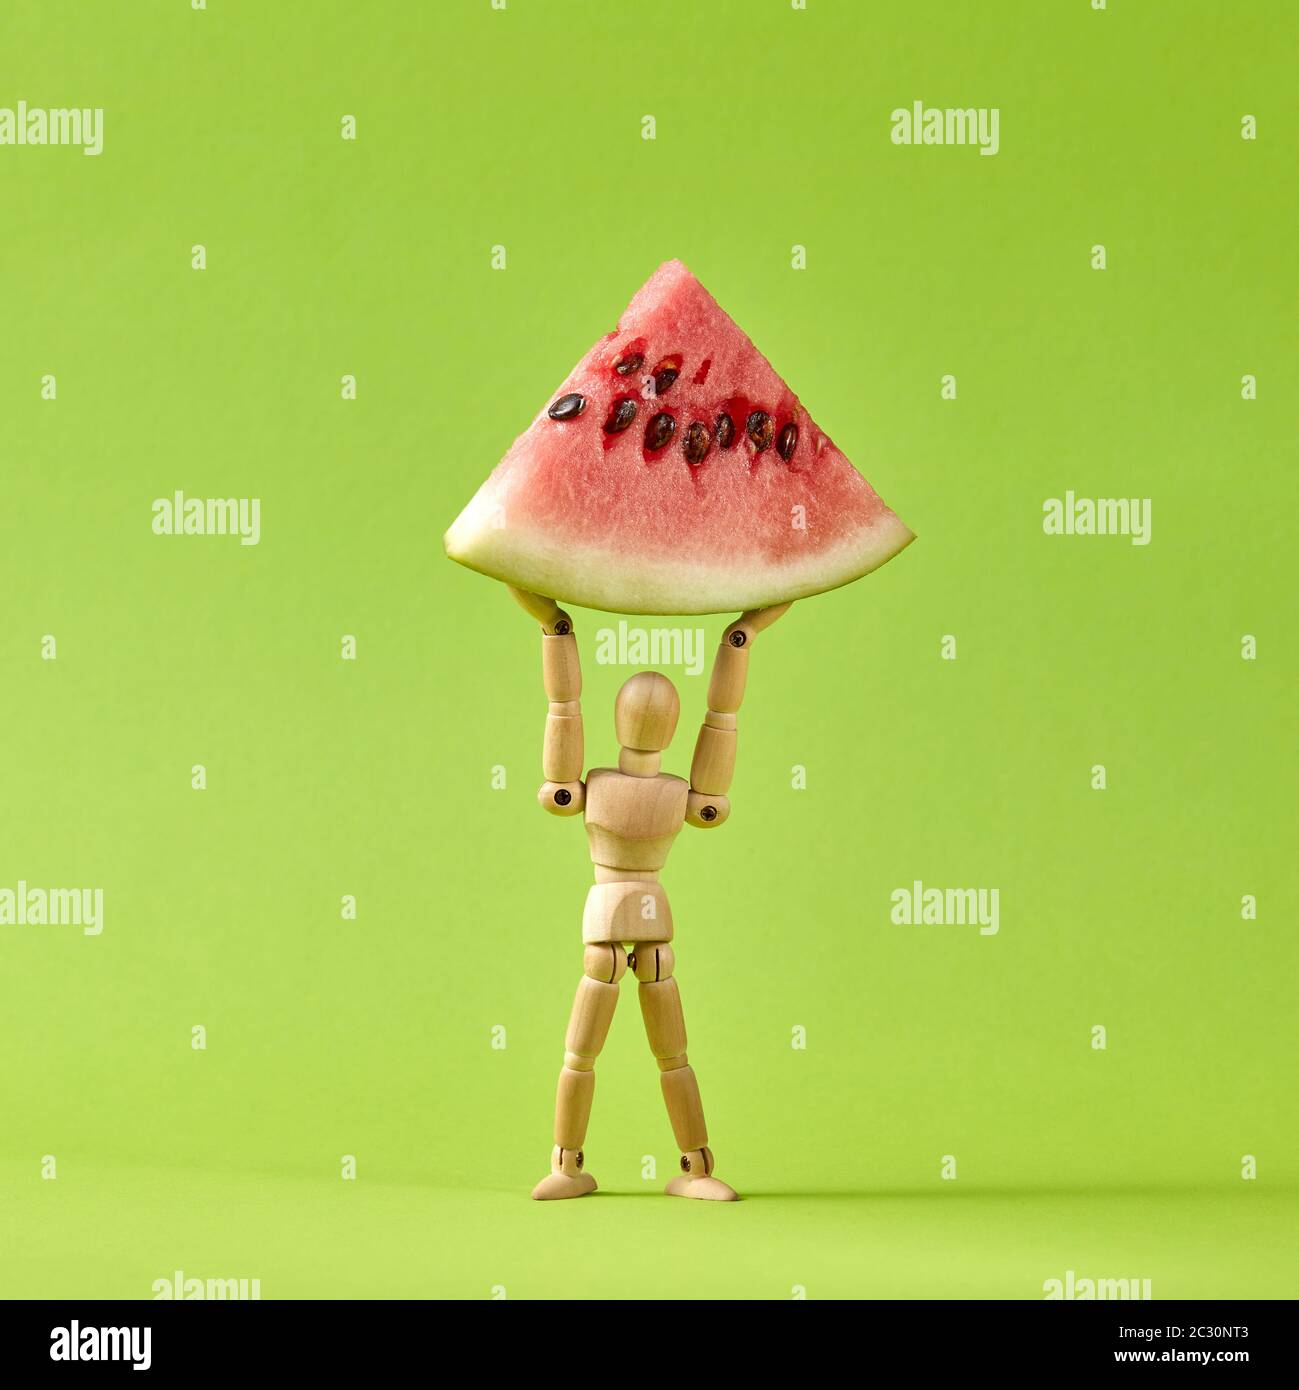 Energie wooden mannequin Modell hält Stück reife Wassermelone  Stockfotografie - Alamy